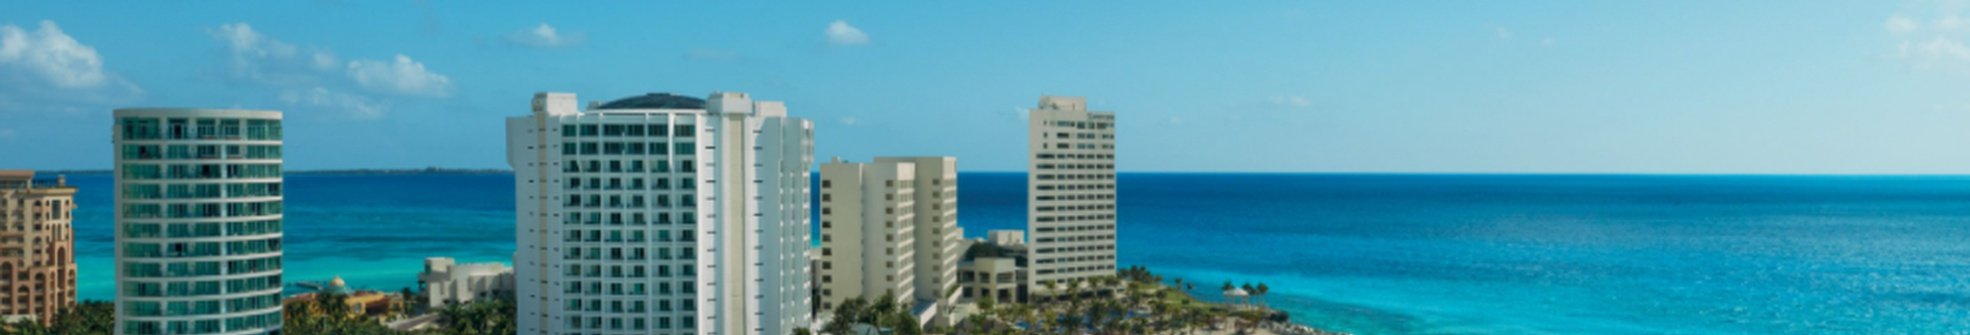 Krystal Grand Cancun Resort & Spa Hotel Krystal Grand Cancun Resort & Spa Hotel - 